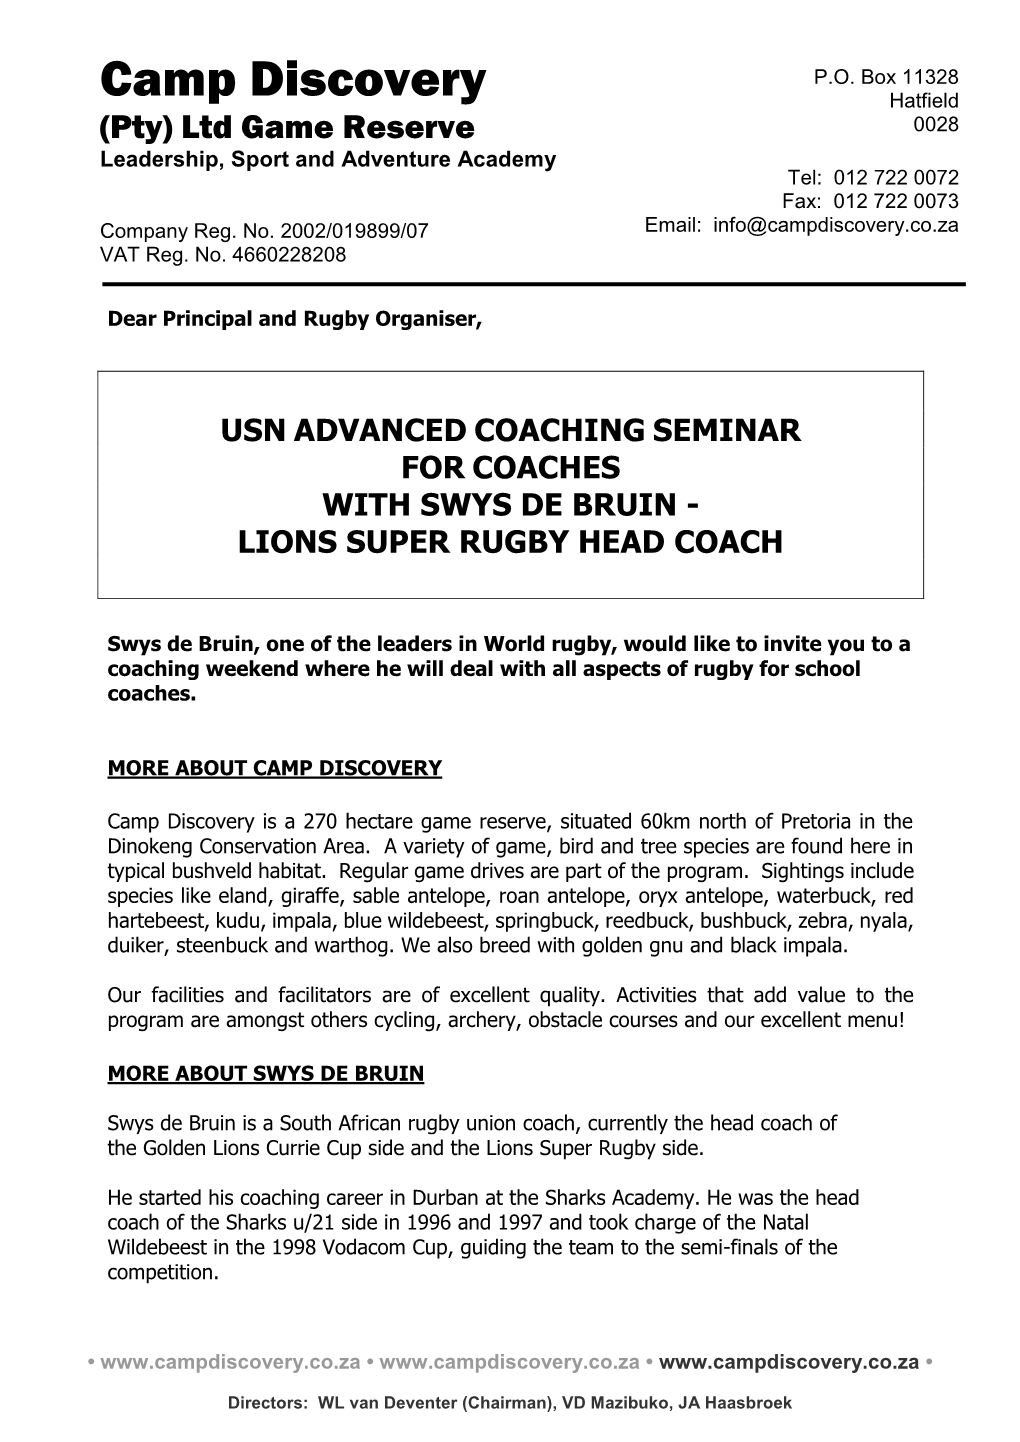 Lions Super Rugby Head Coach